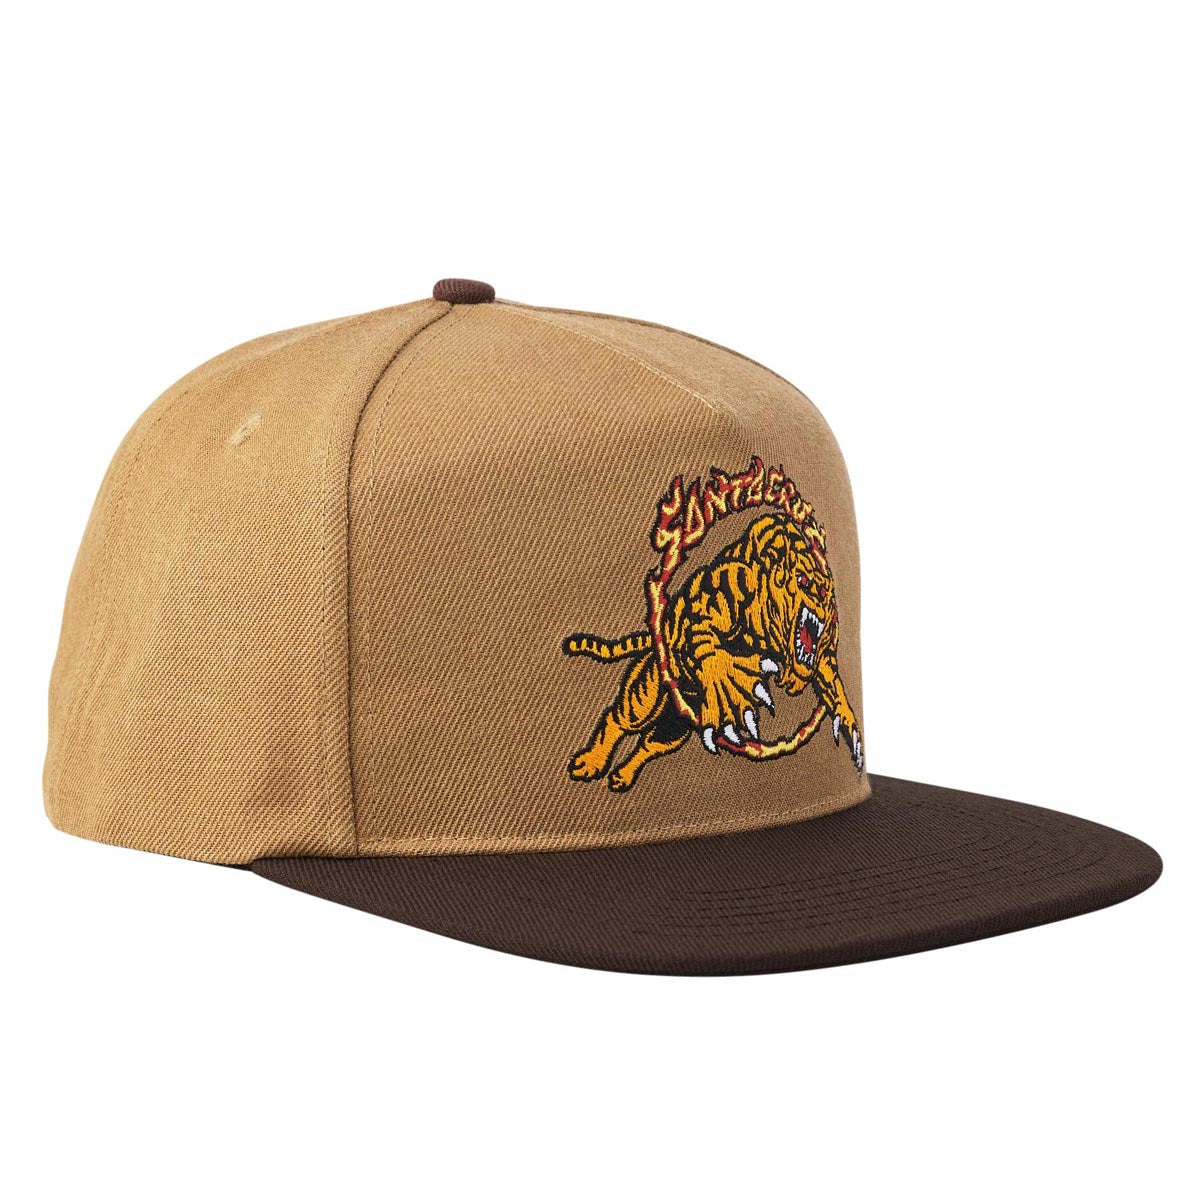 Santa Cruz Salba Tiger Snapback Hat - Khaki/Brown image 3